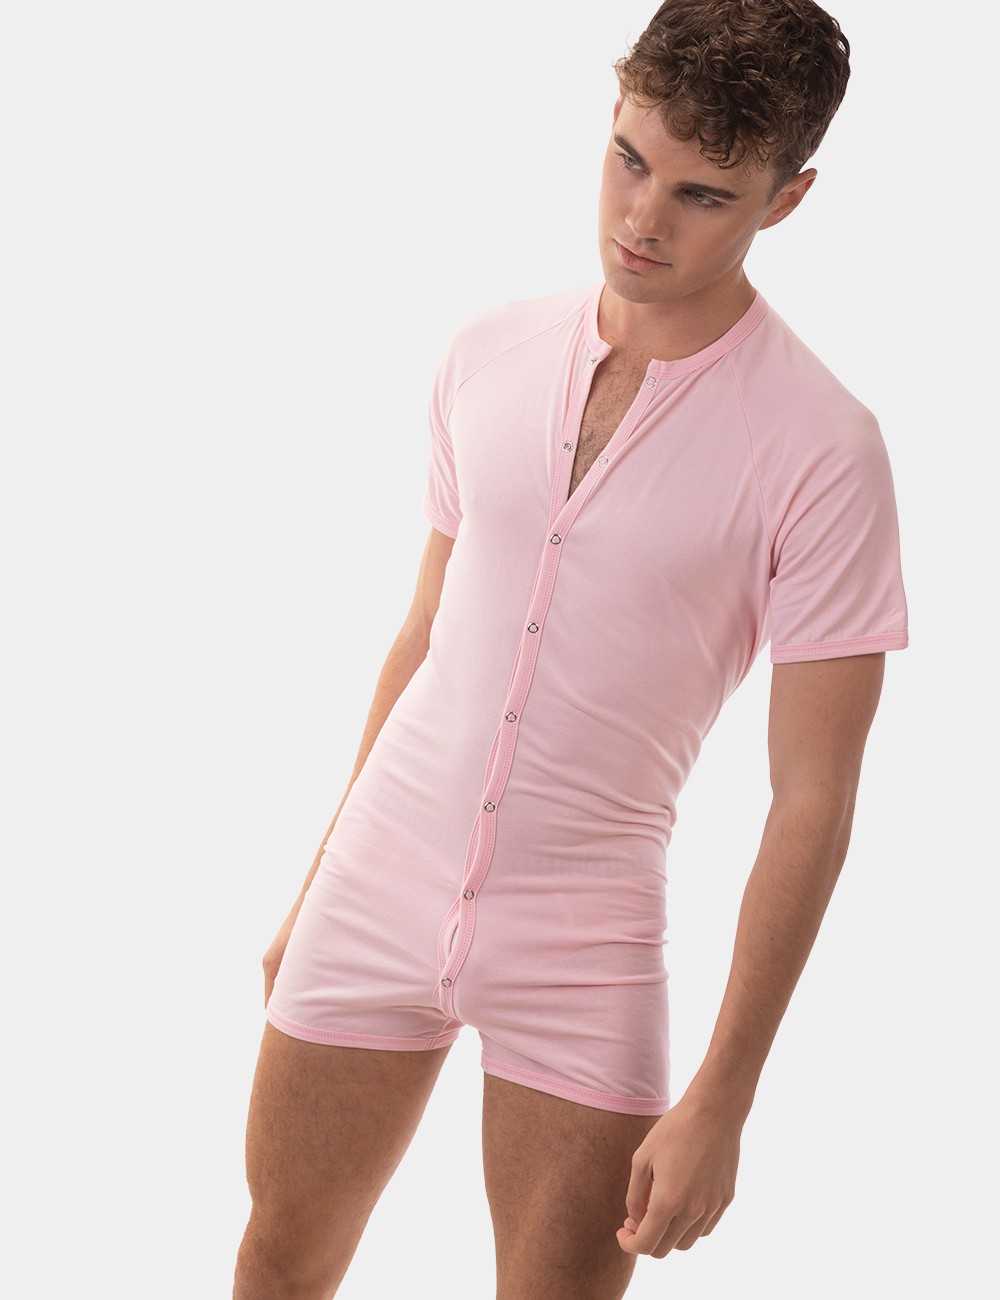 Union Suit Varva - Pink